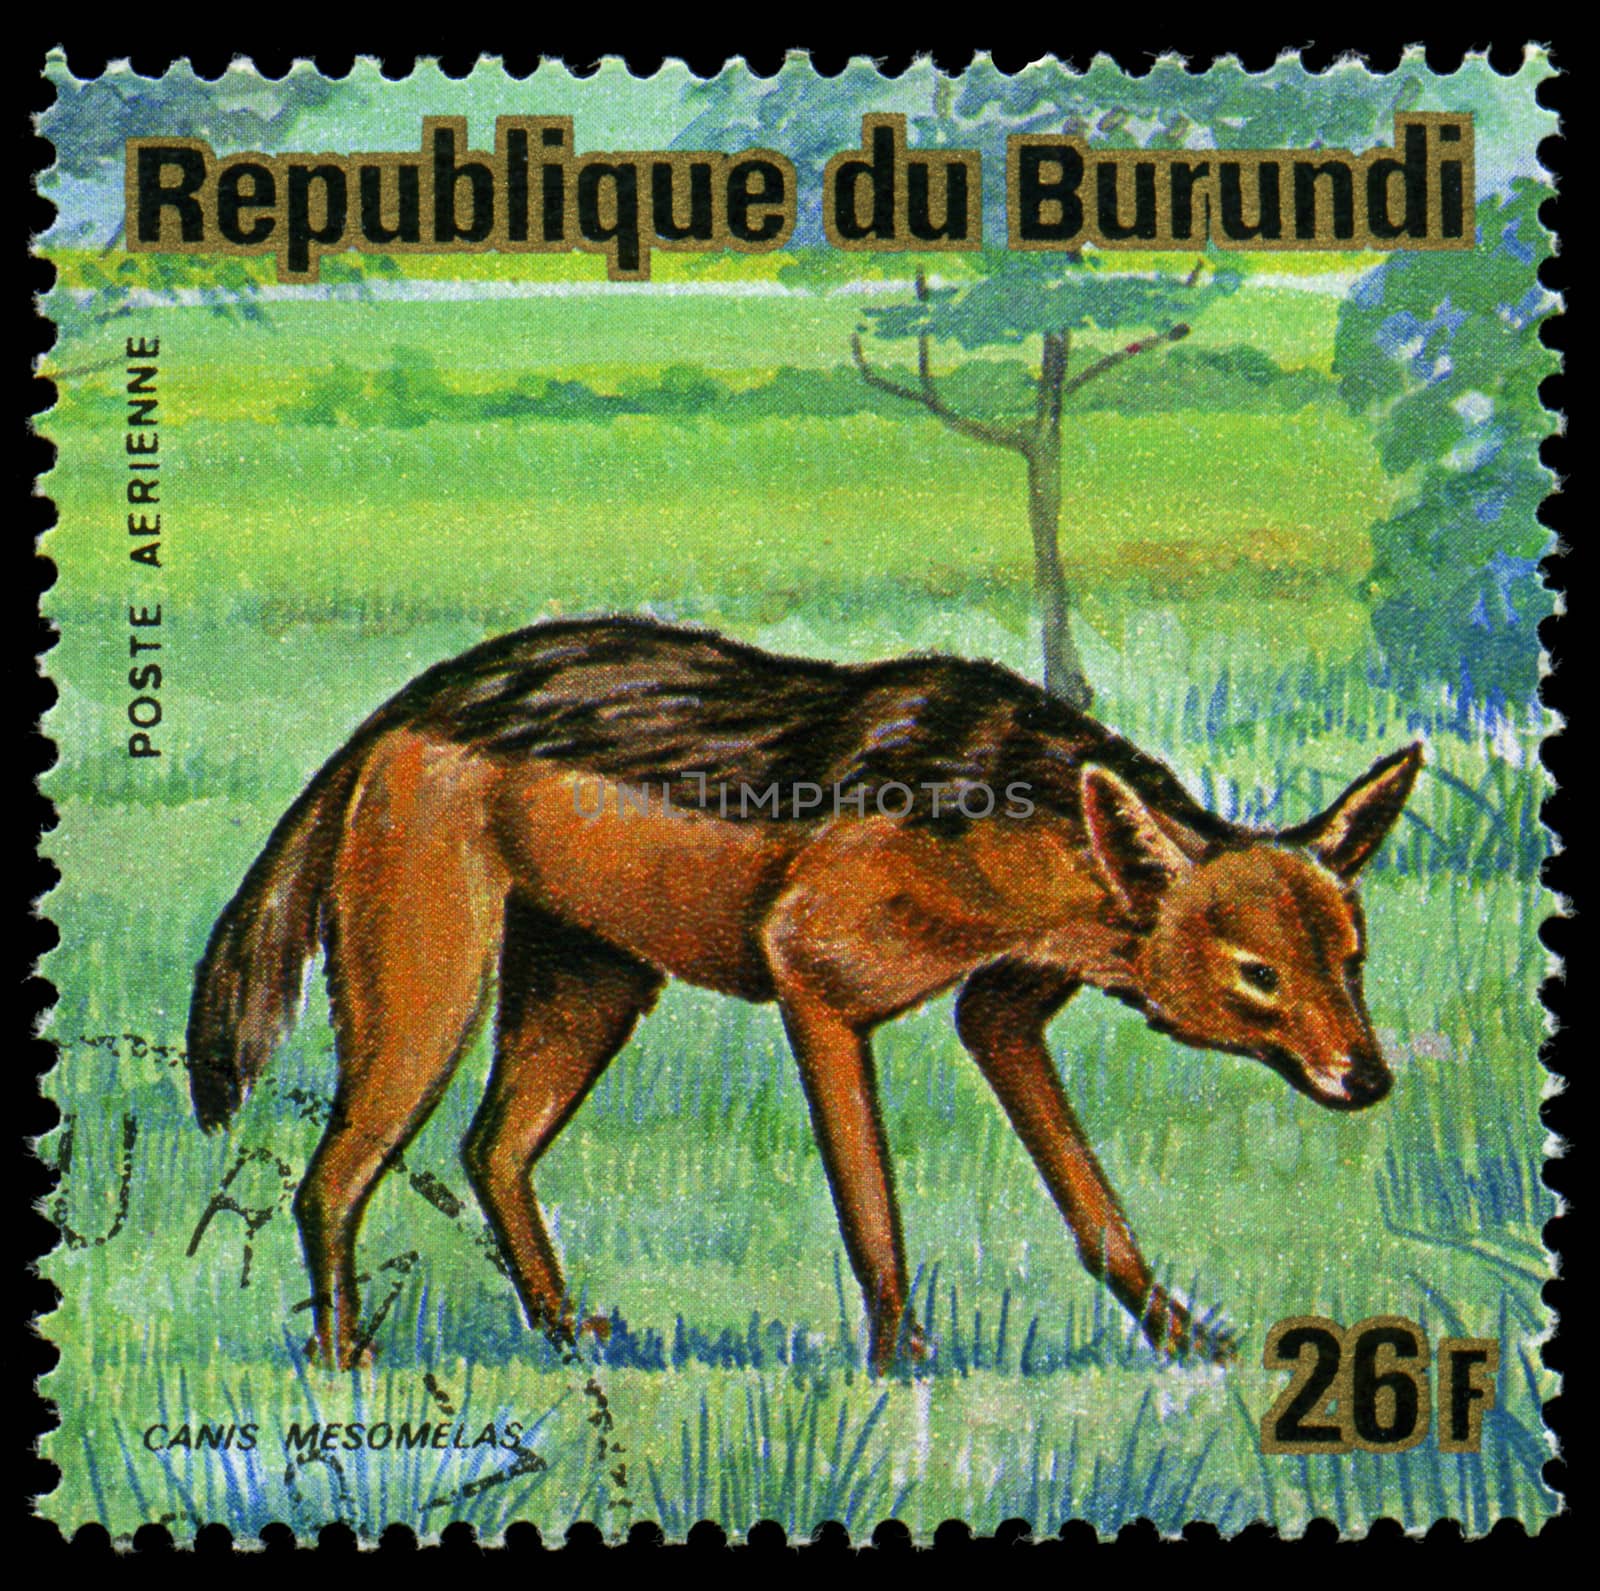 BURUNDI - CIRCA 1964: A stamp printed in Burundi shows a wild animal, circa 1964. by Zhukow